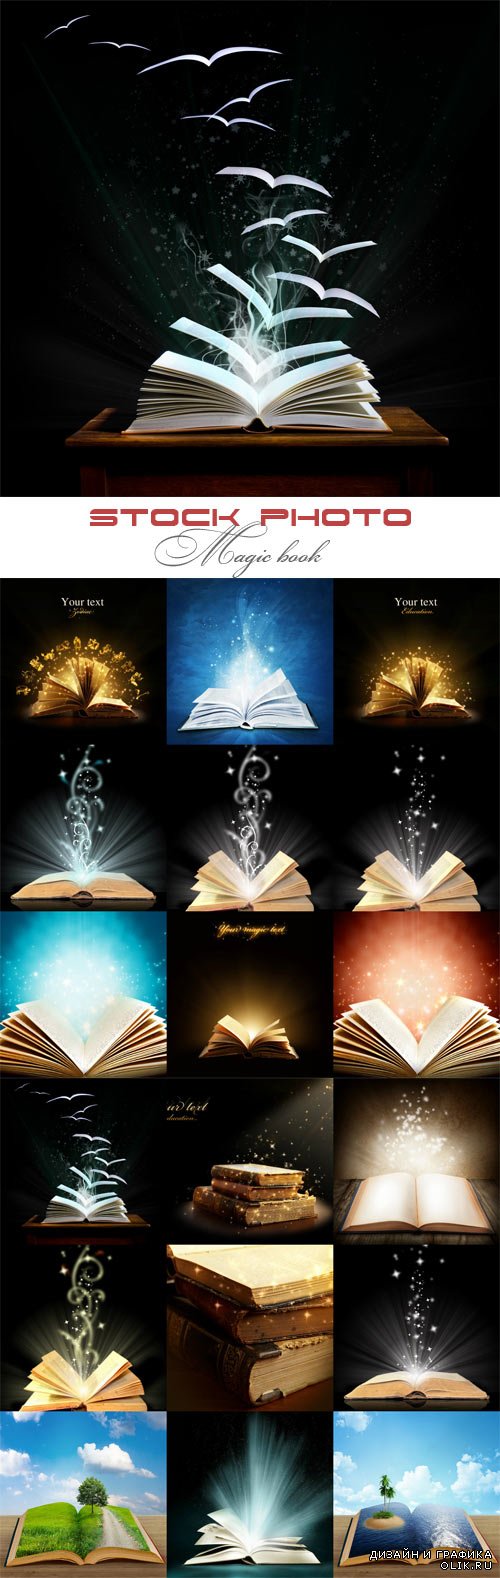 Magic book raster graphics